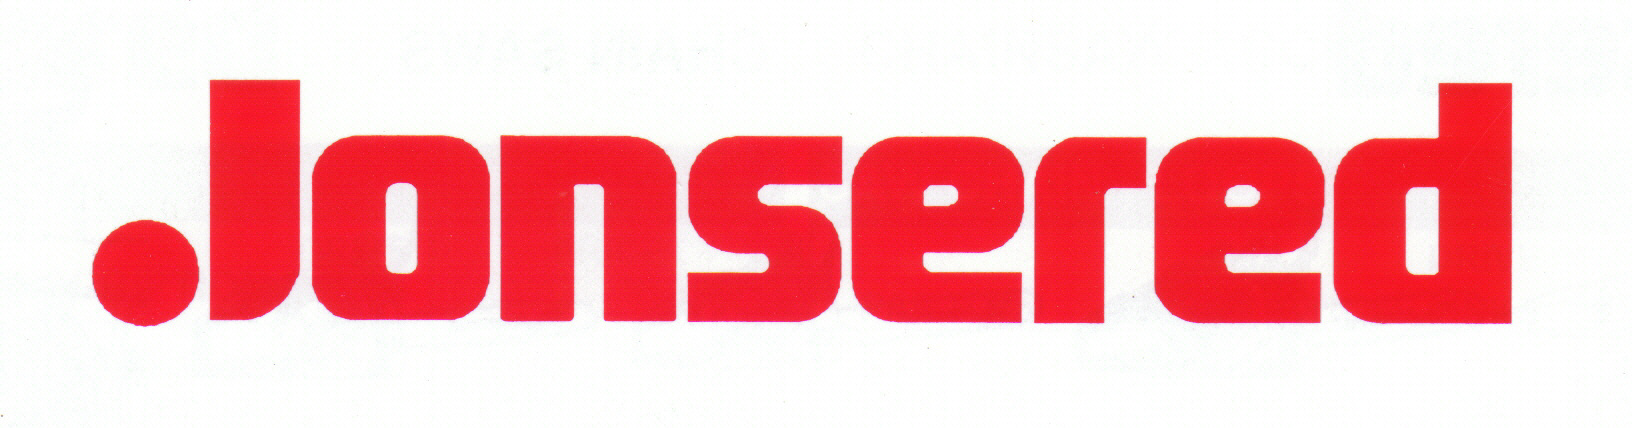 jonsered logo